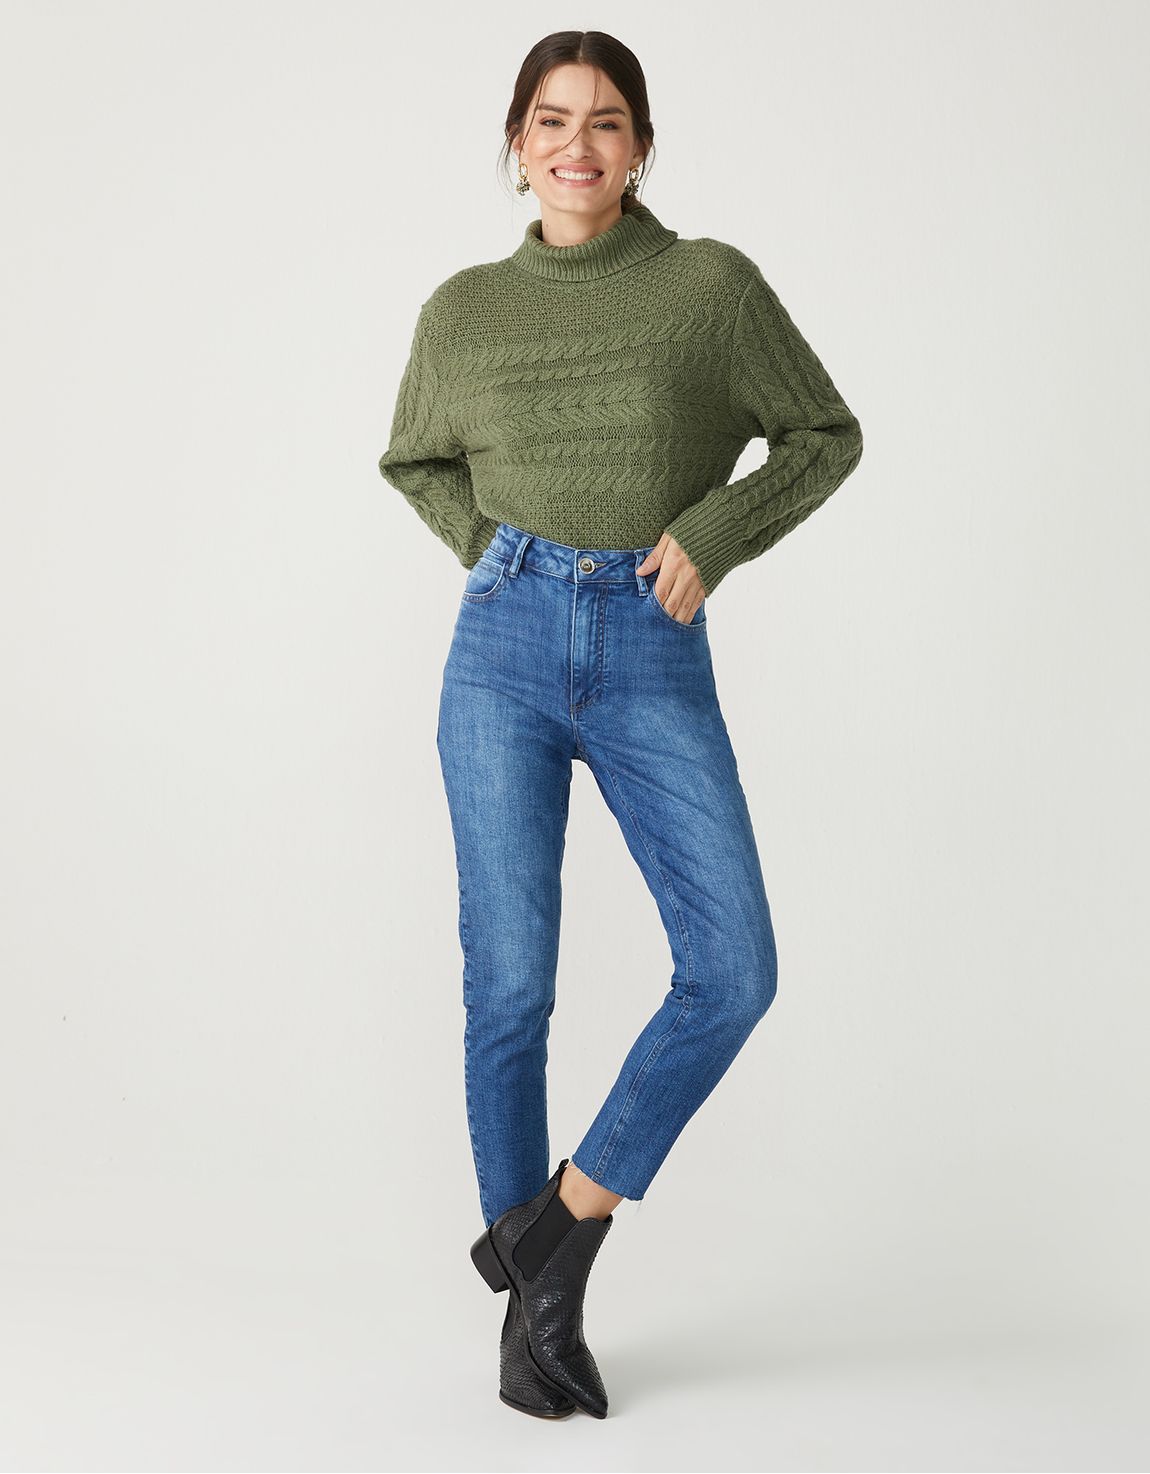 Calça jeans skinny cintura alta